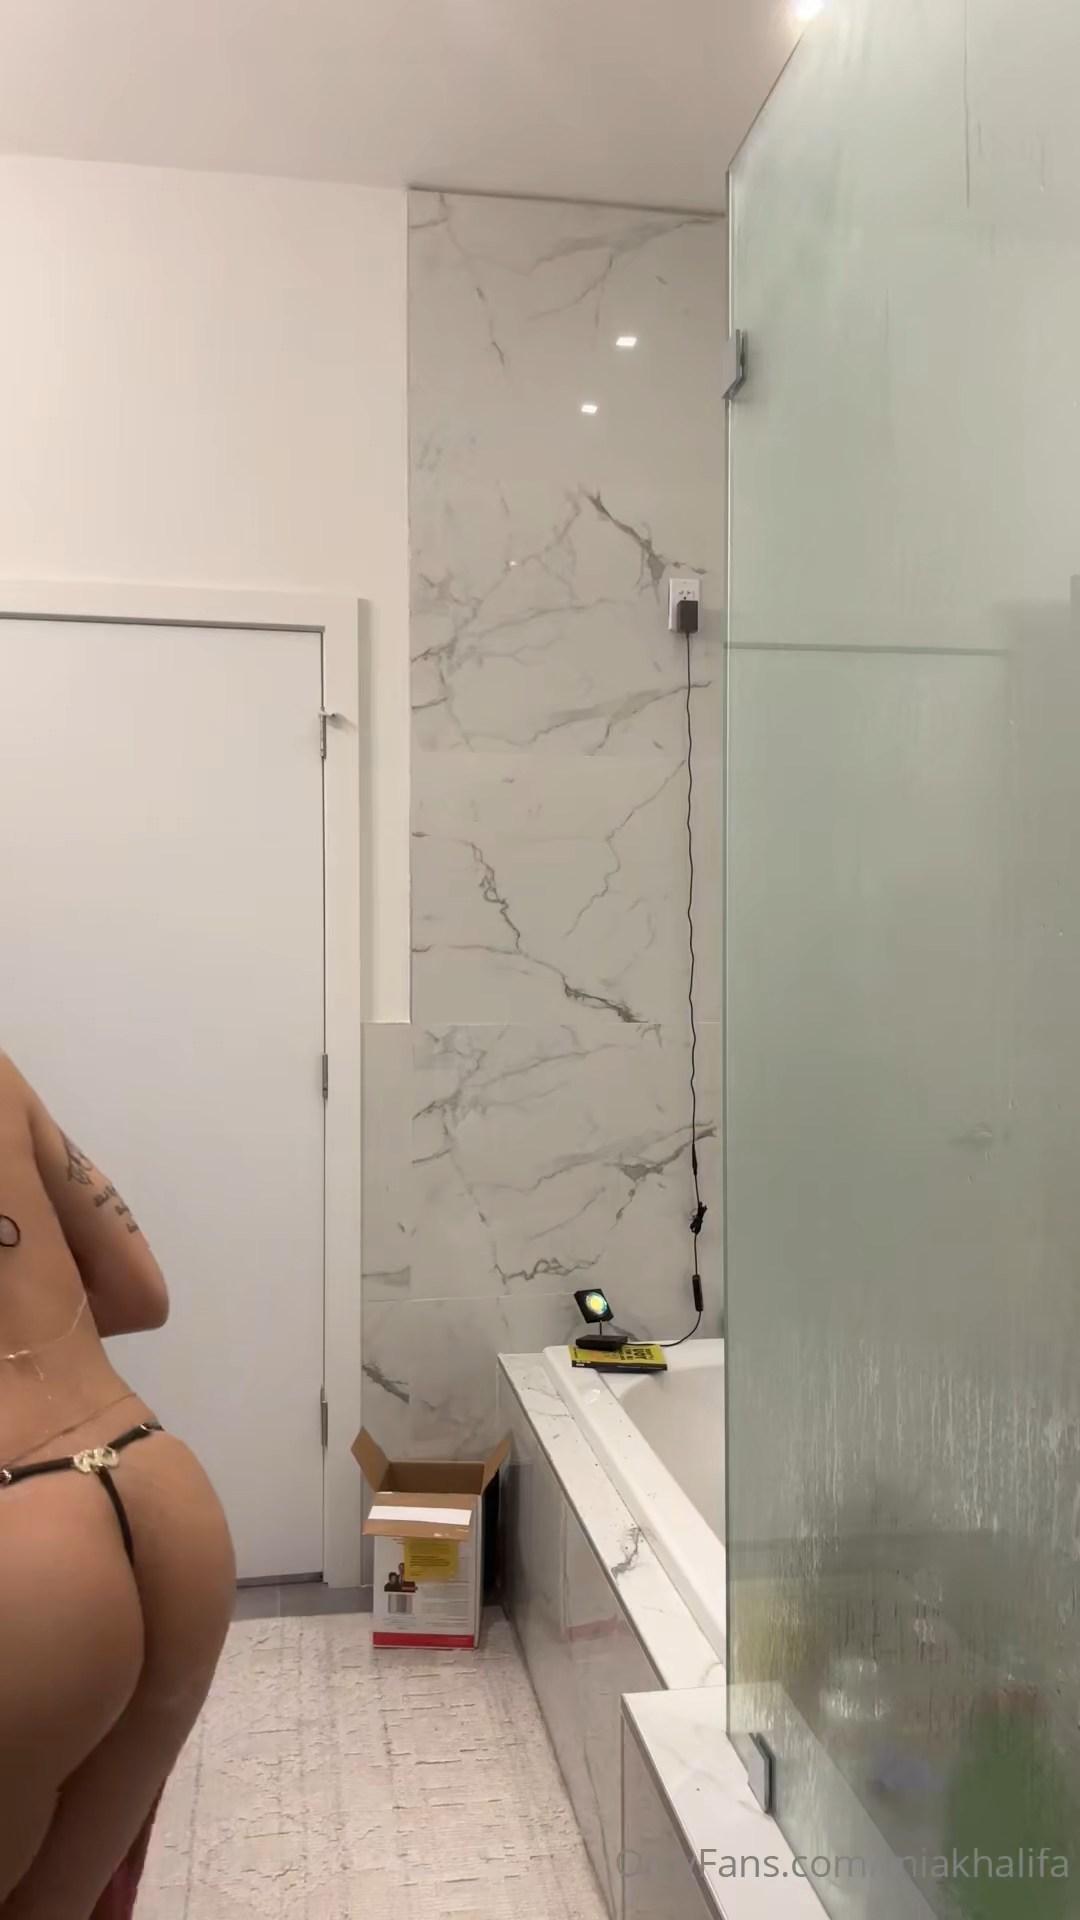 Mia Khalifa OnlyFans Wet Boobs Shower Video Leaked